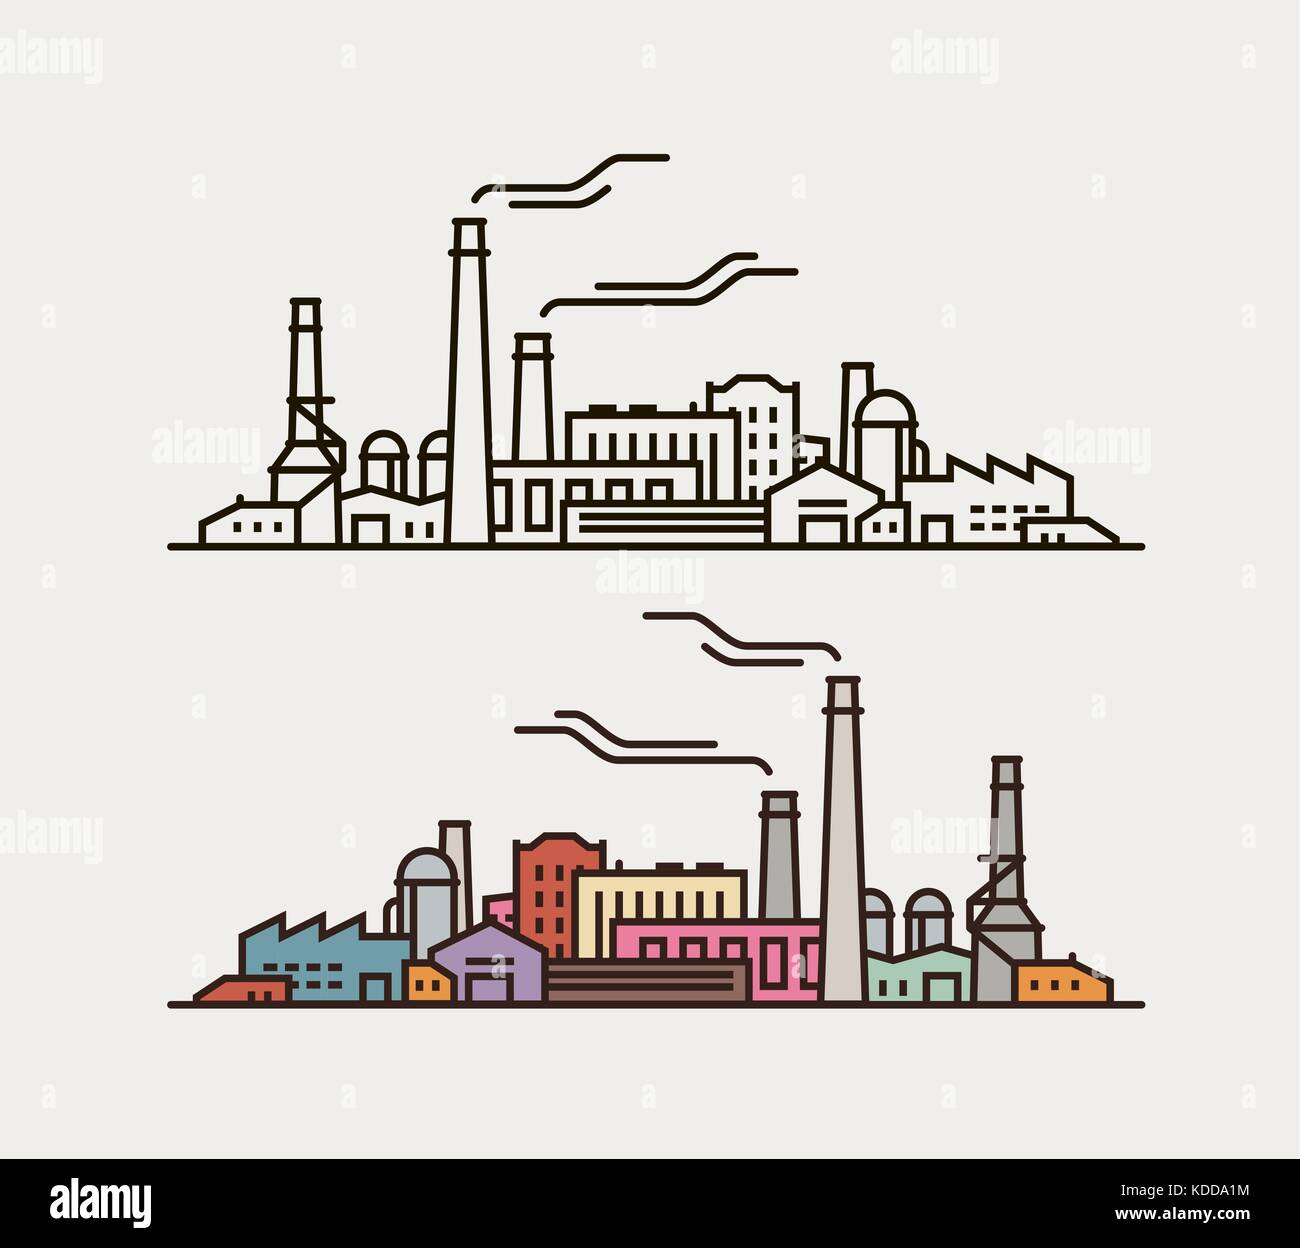 Industry concept. Industrial enterprise, factory, building icon or symbol. Vector illustration Stock Vector